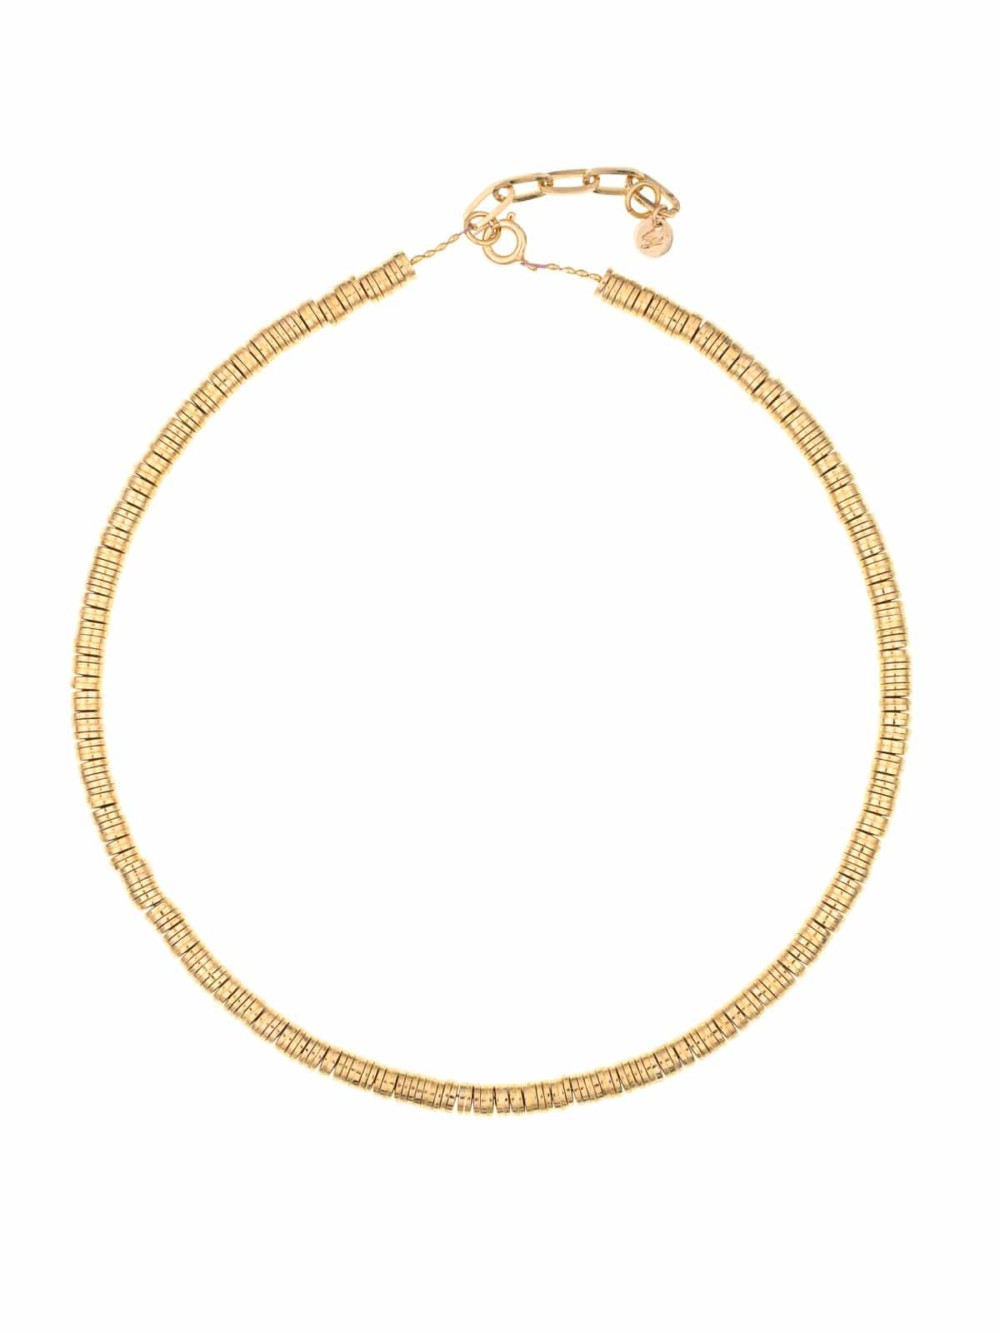 Tendance Trend Bijoux Jewellery Fashion Blog Mode Luj Paris Collier Necklace Or Gold Choker Ras Du Cou